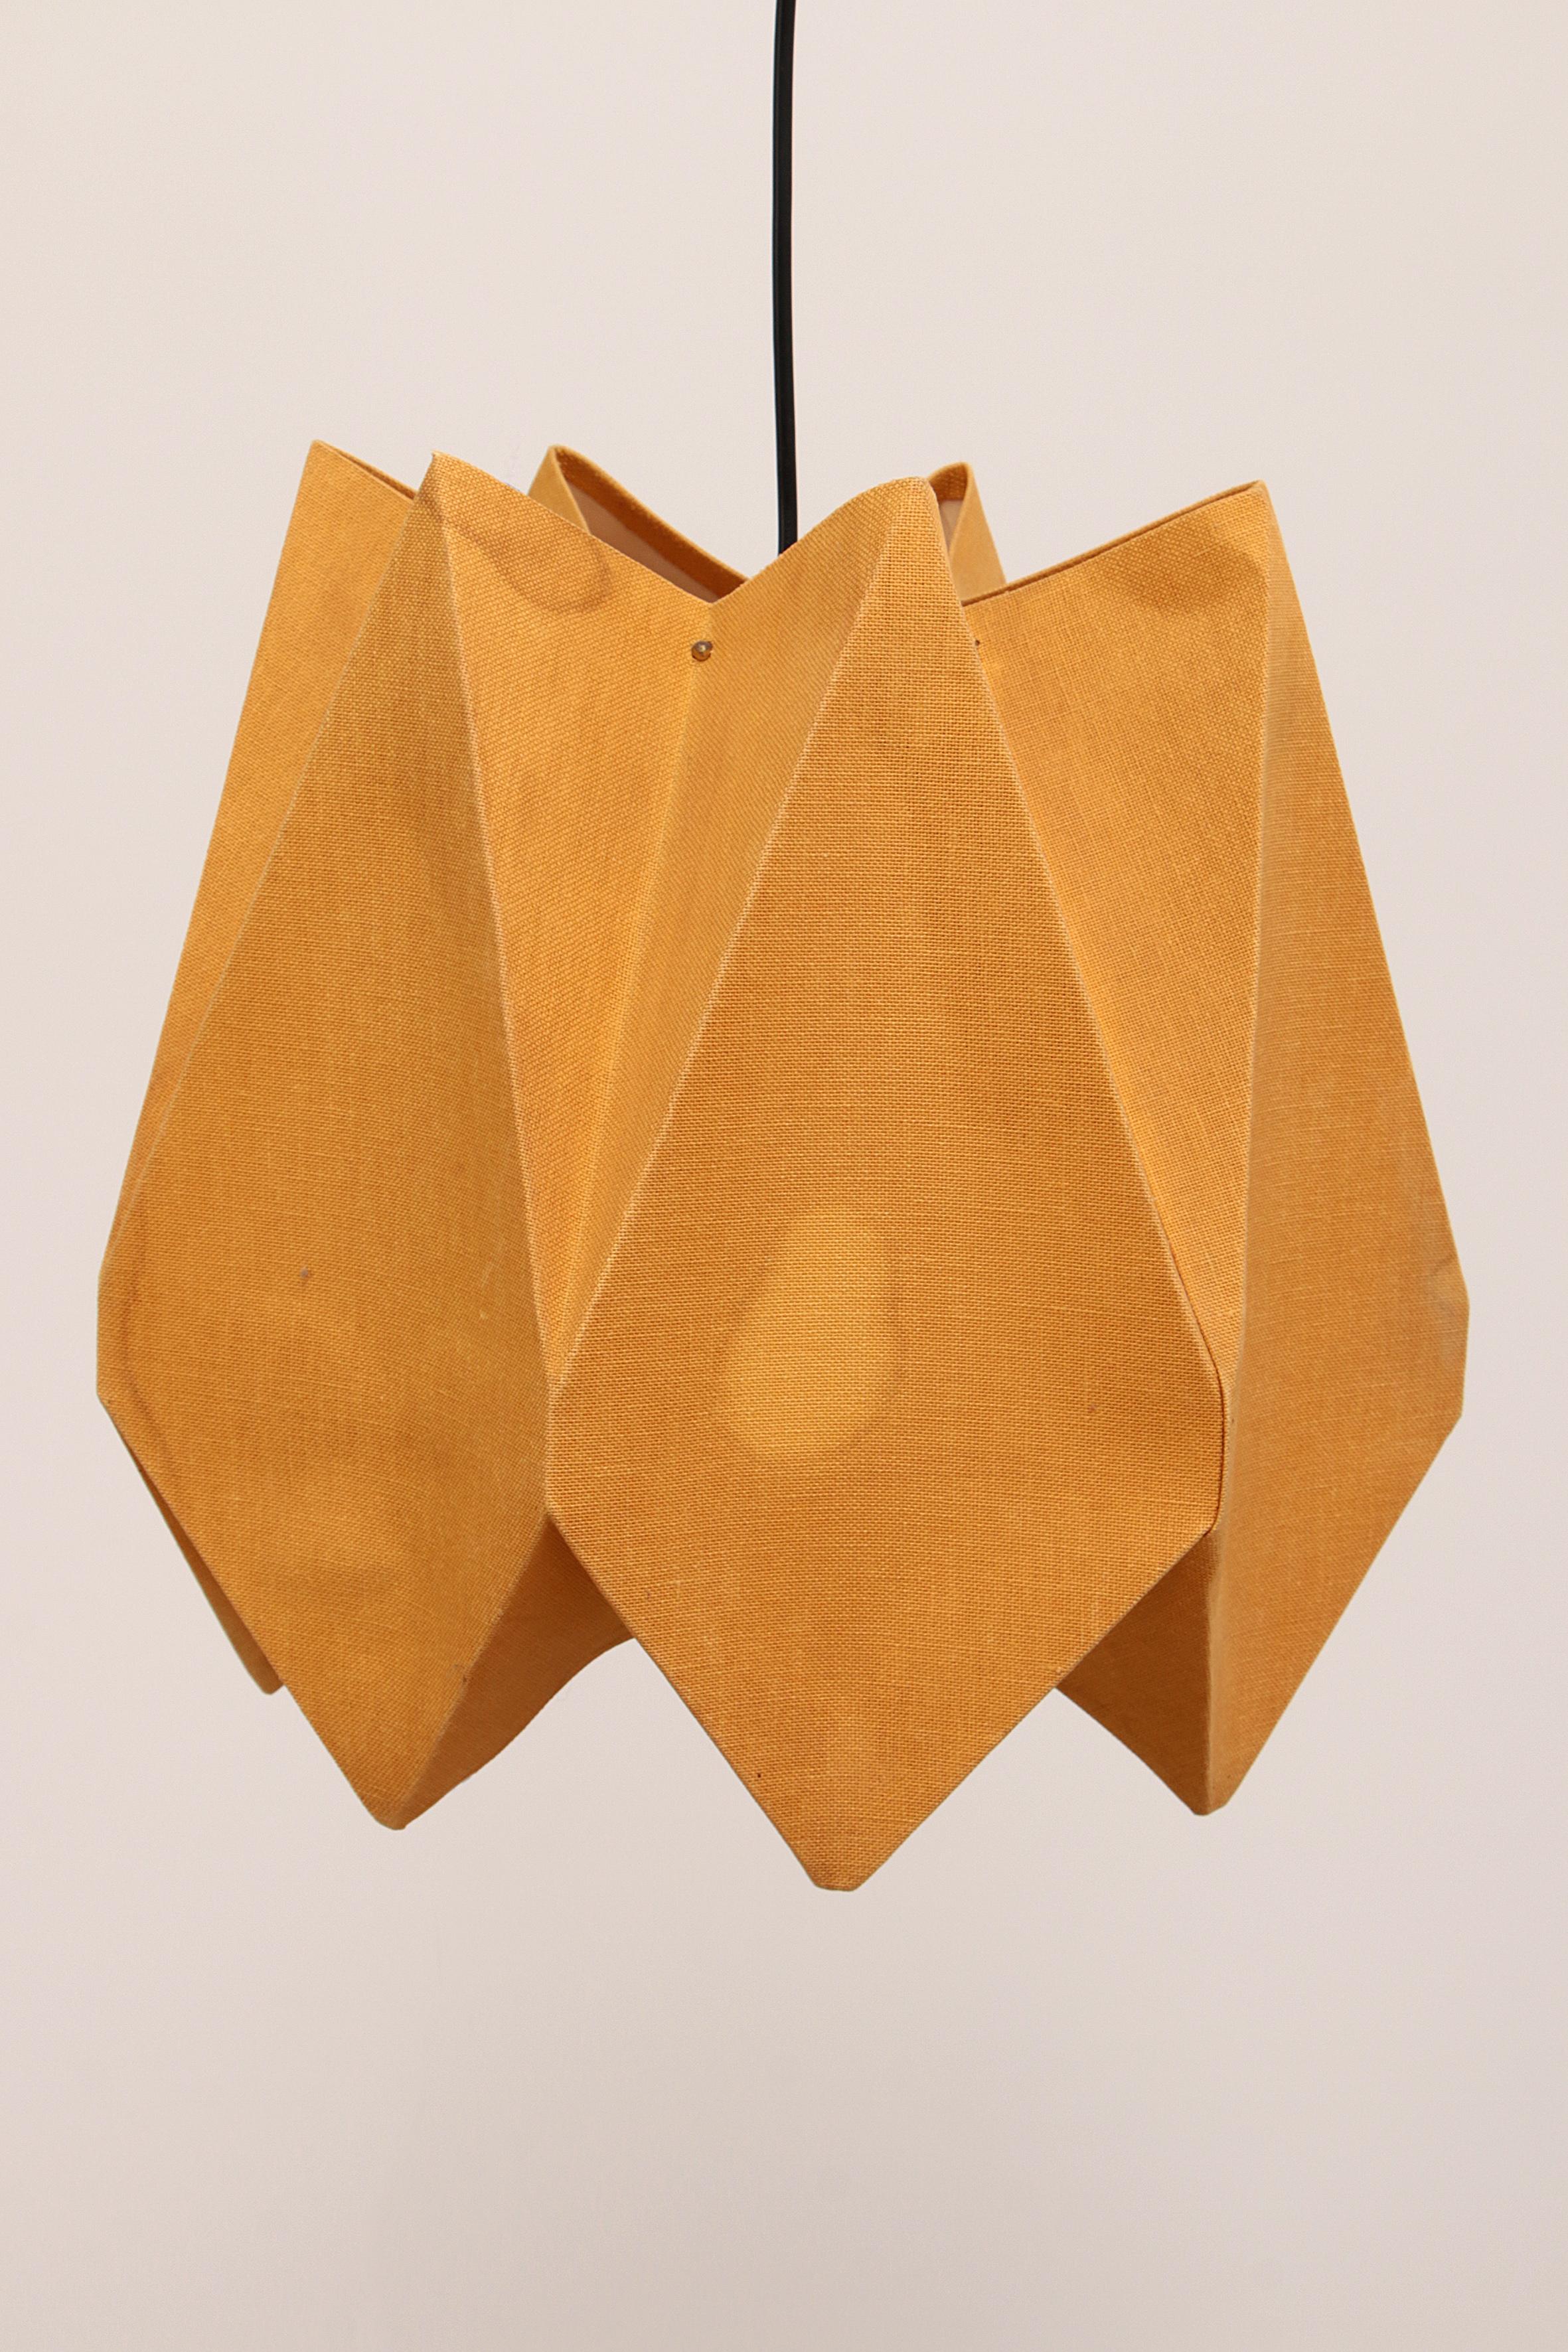 Orange Vintage Fabric Hanging Lamp, 1960s For Sale 2